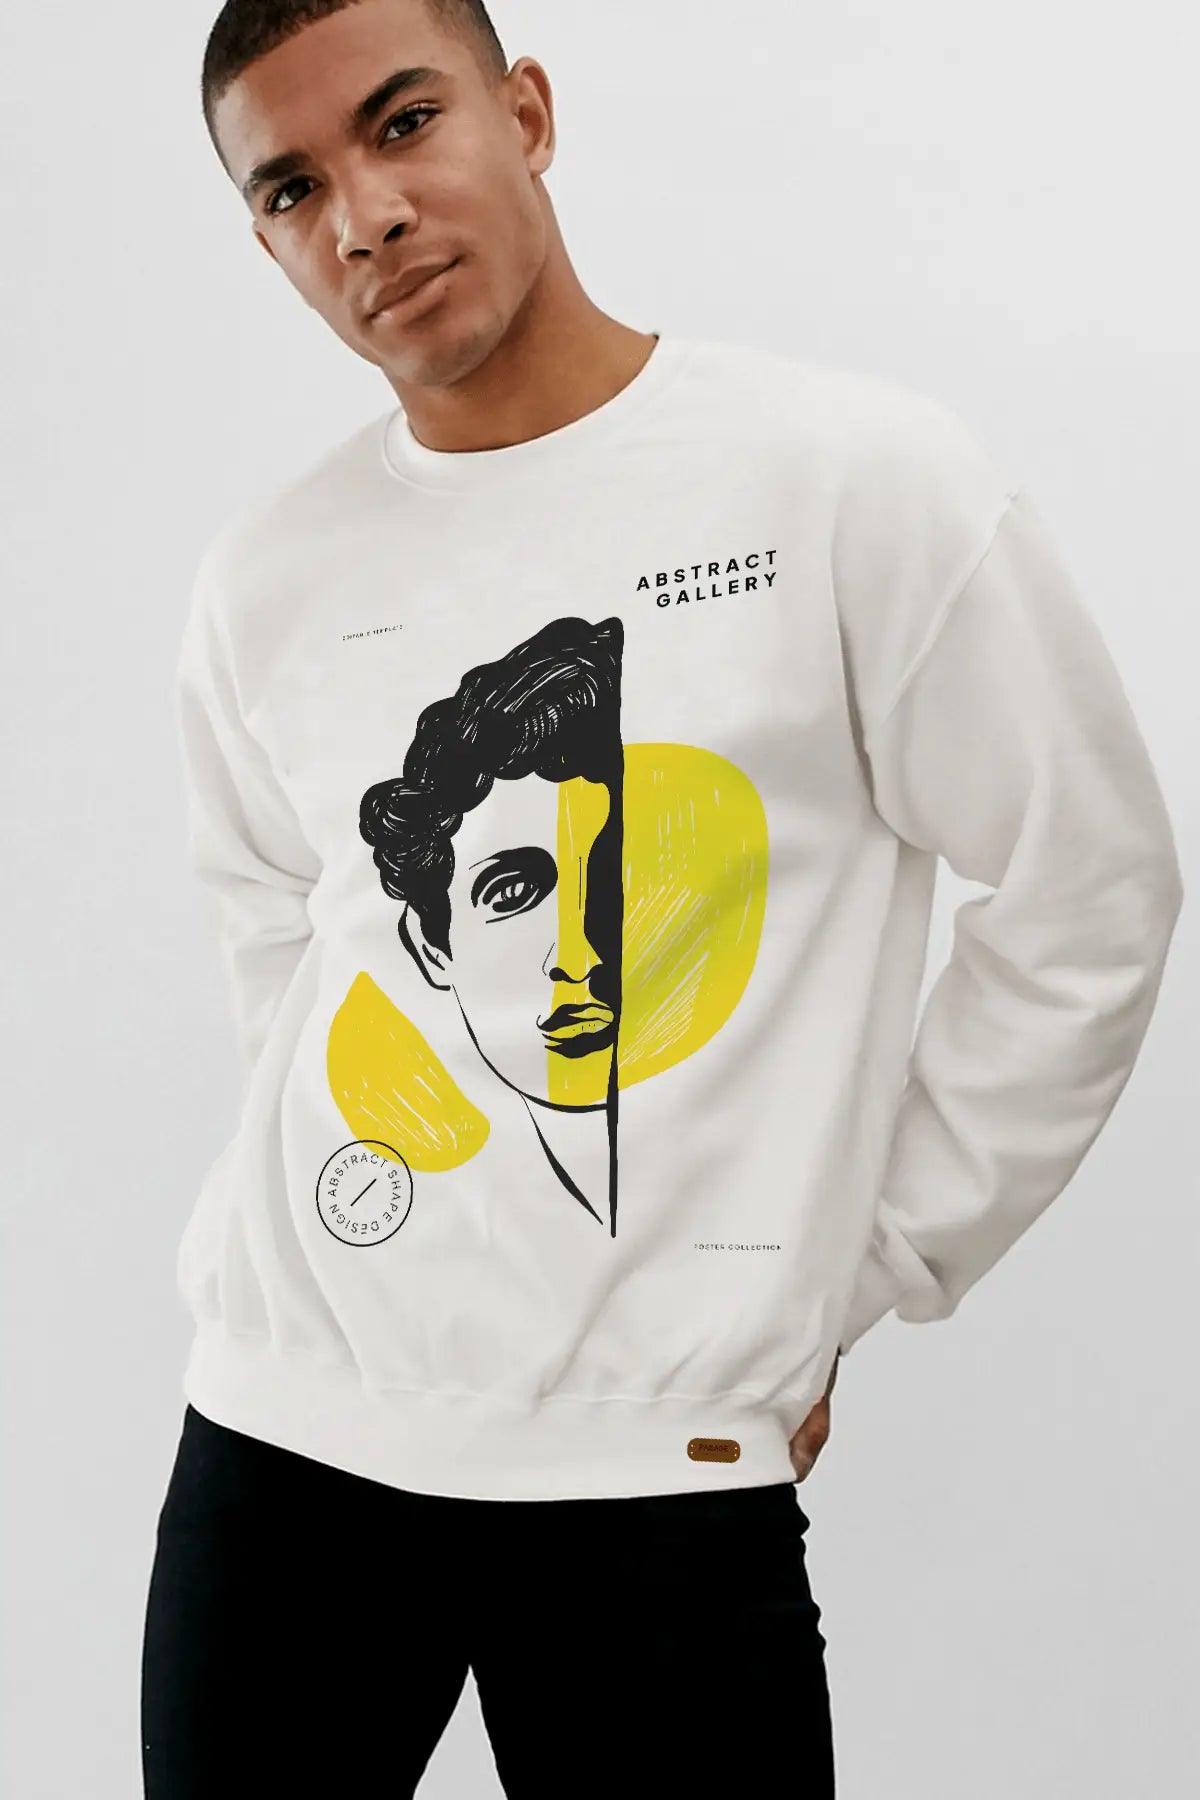 Abstract Gallery Oversize Erkek Sweatshirt - PΛSΛGE